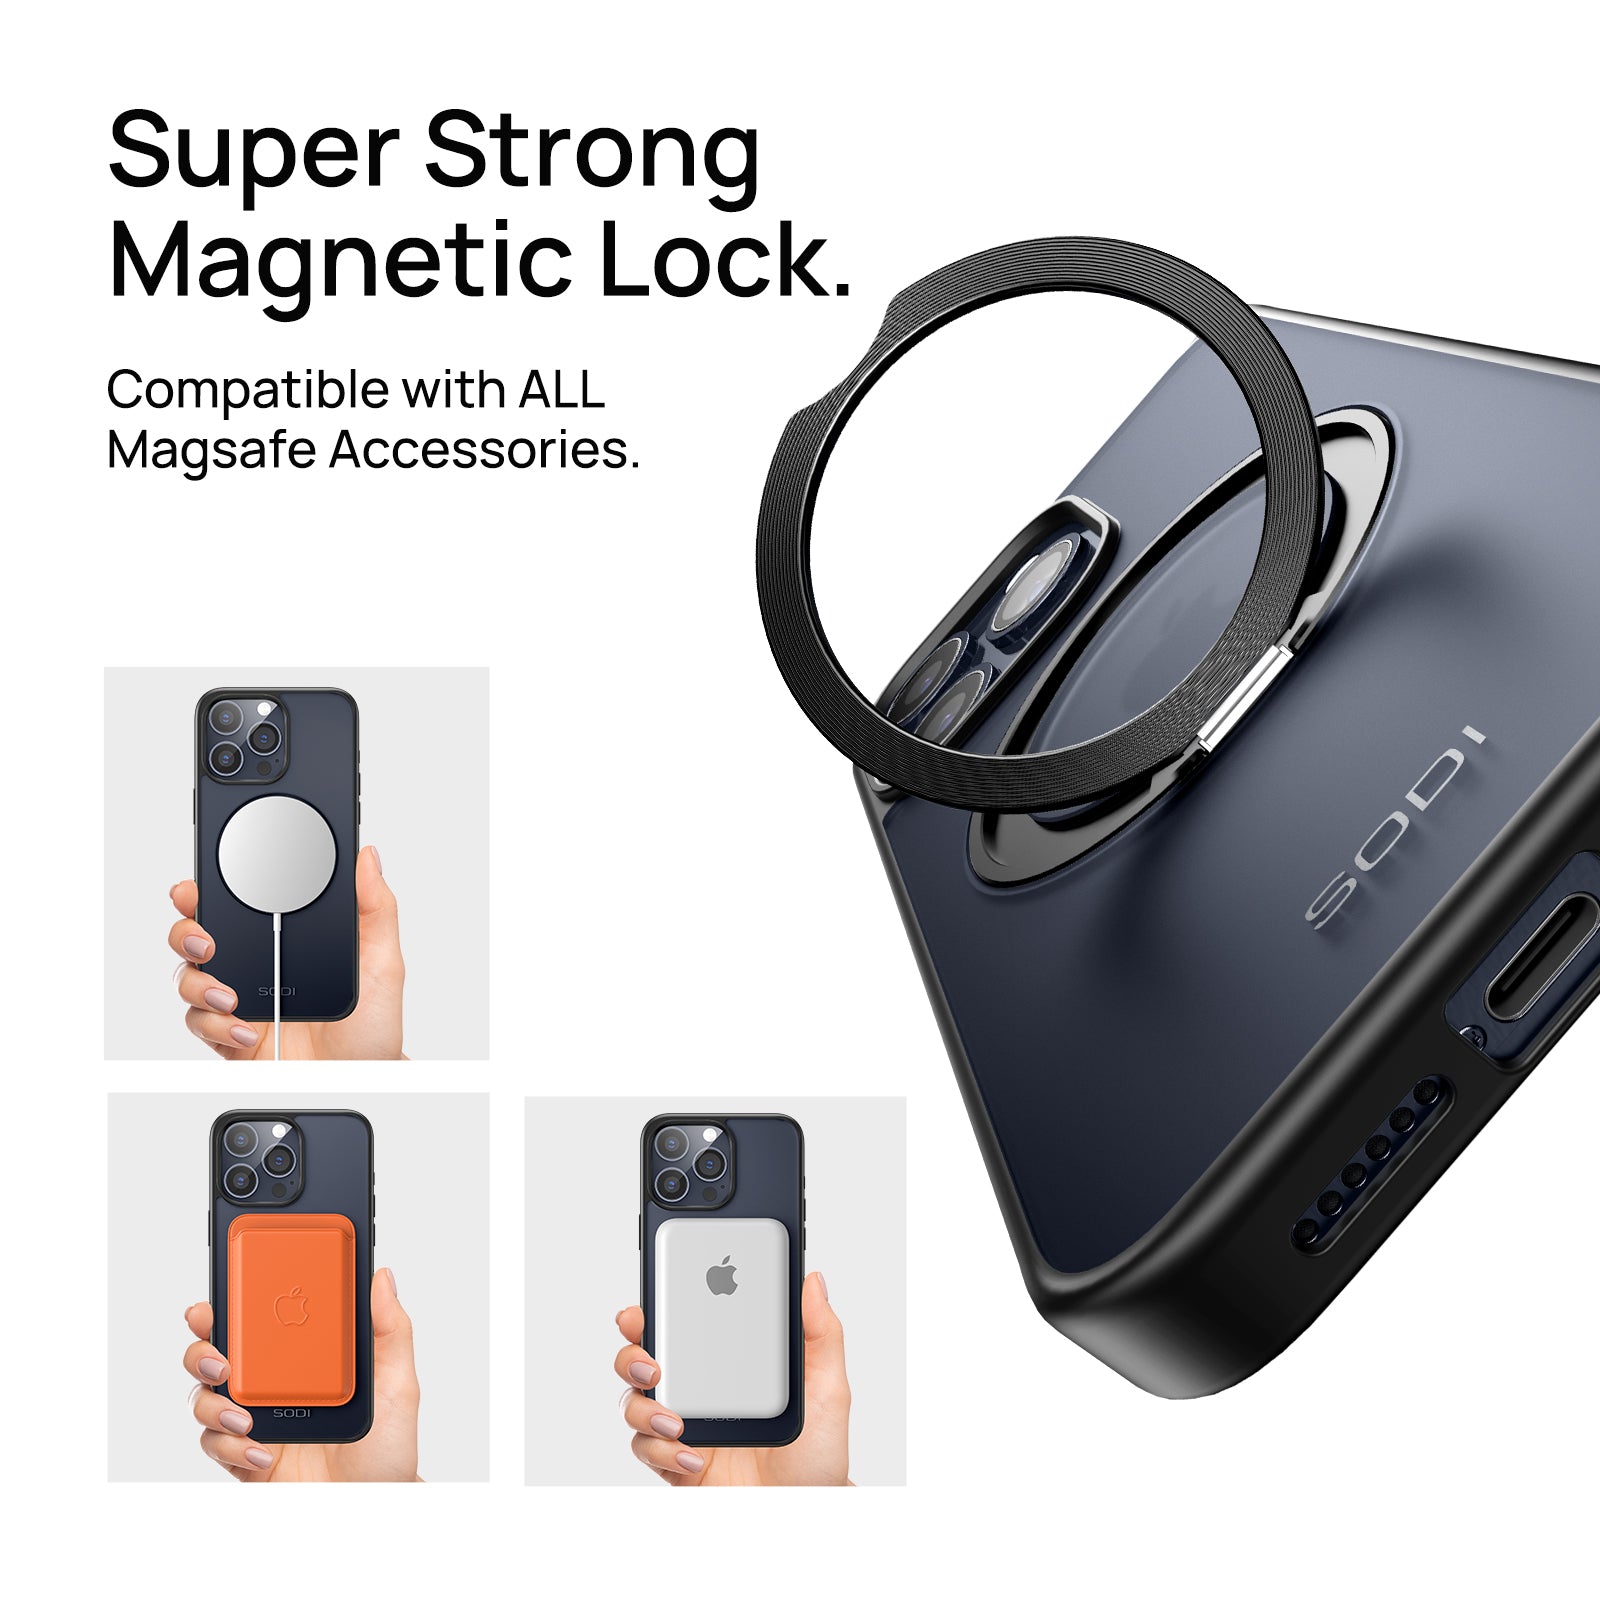 SODI SIT150 iPhone 15 Pro/Pro Max Magnetische Ringhülle